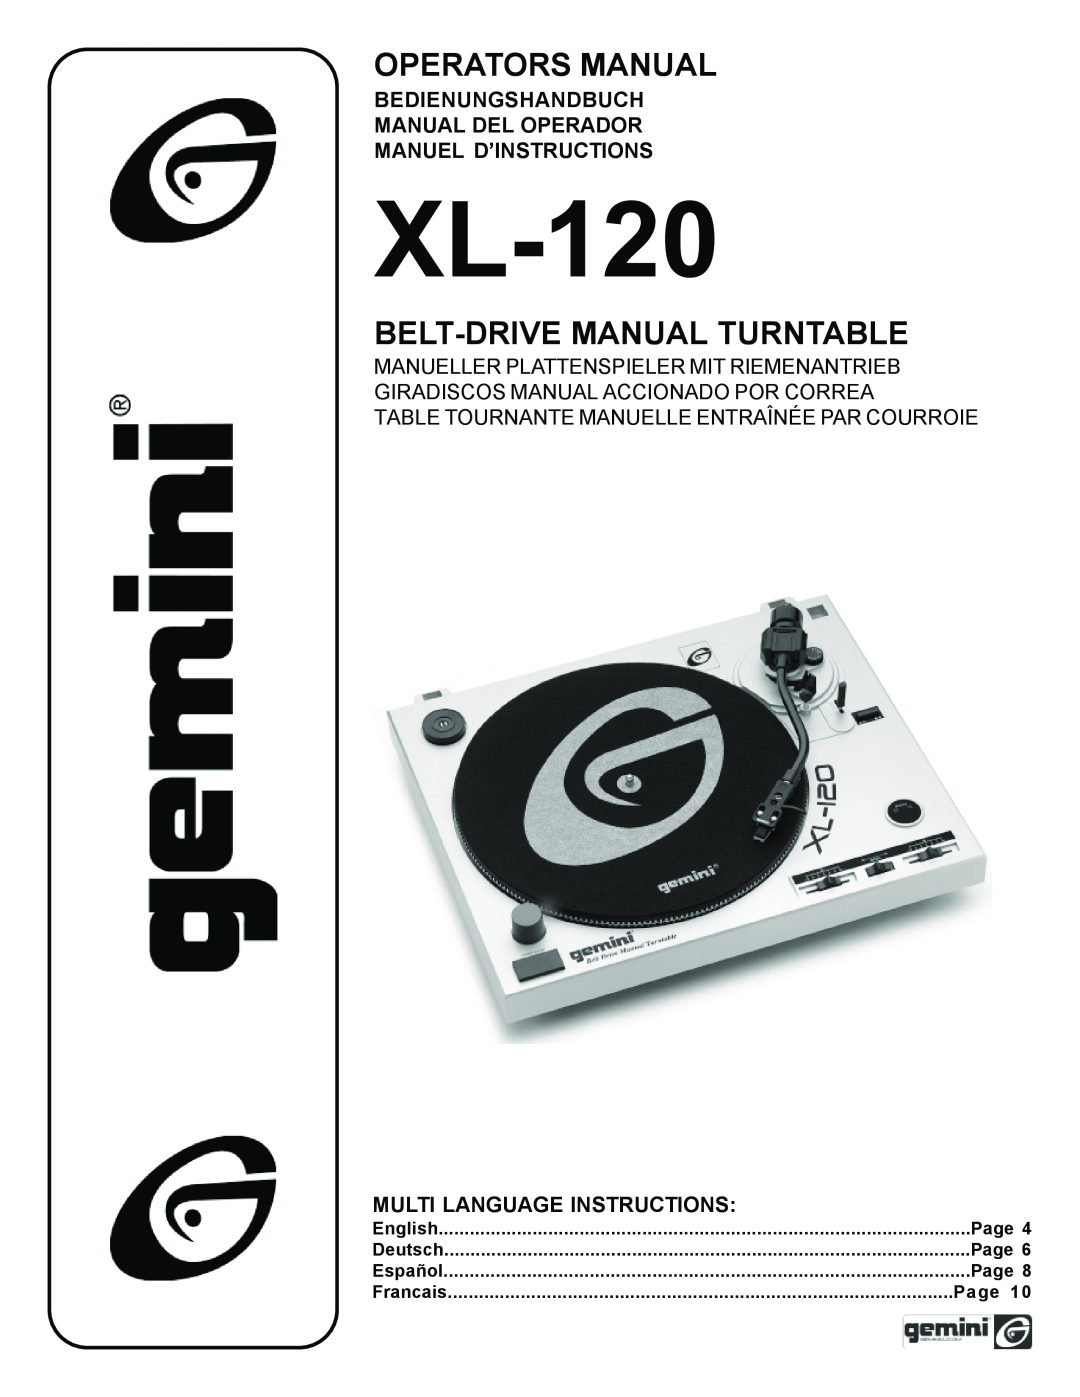 Gemini XL-120 manual Bedienungshandbuch Manual Del Operador, Manuel D’Instructions, Multi Language Instructions, Page 